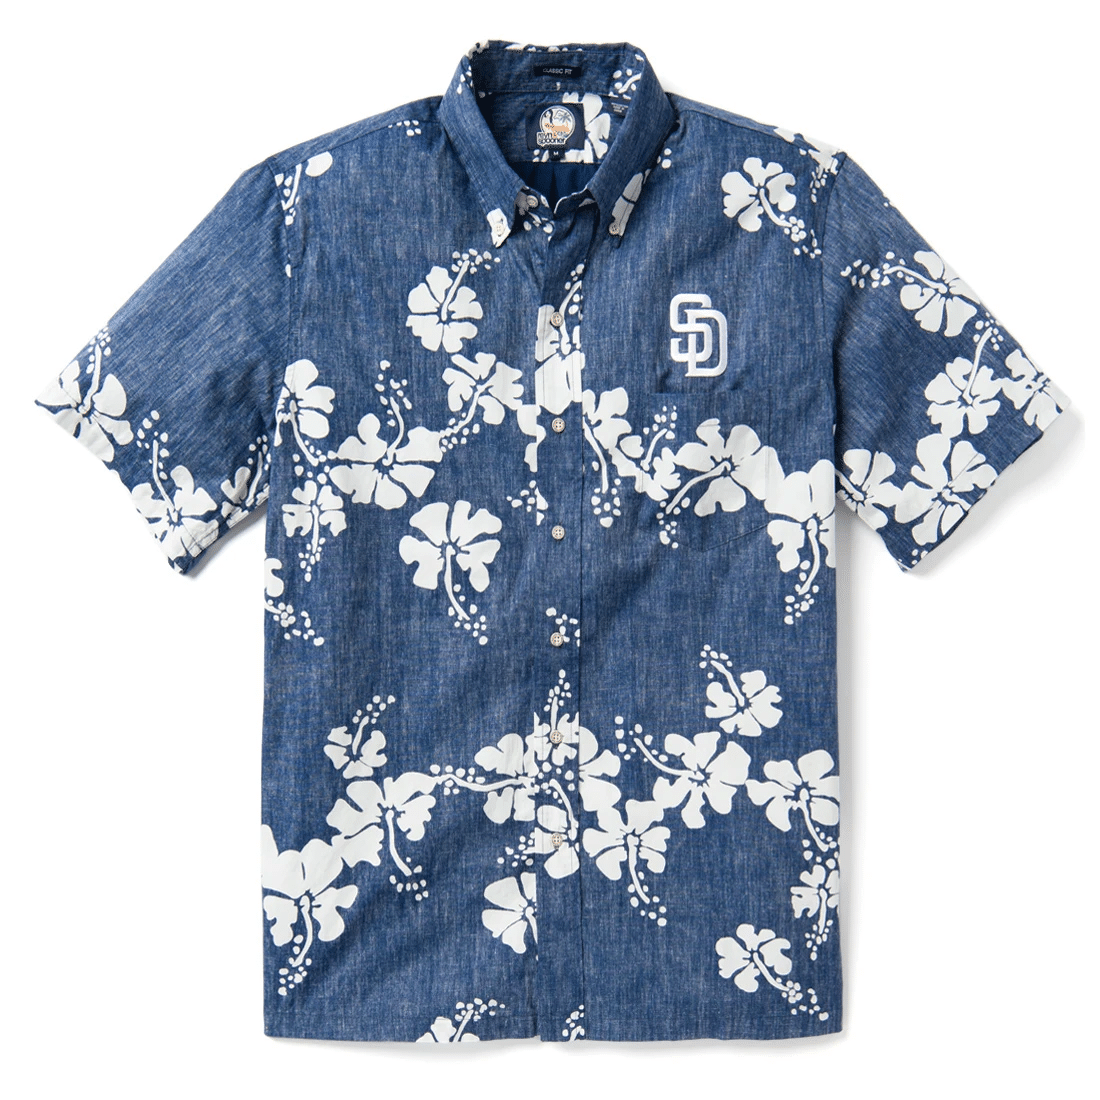 San Diego Paders 50th State Hawaiian Shirt